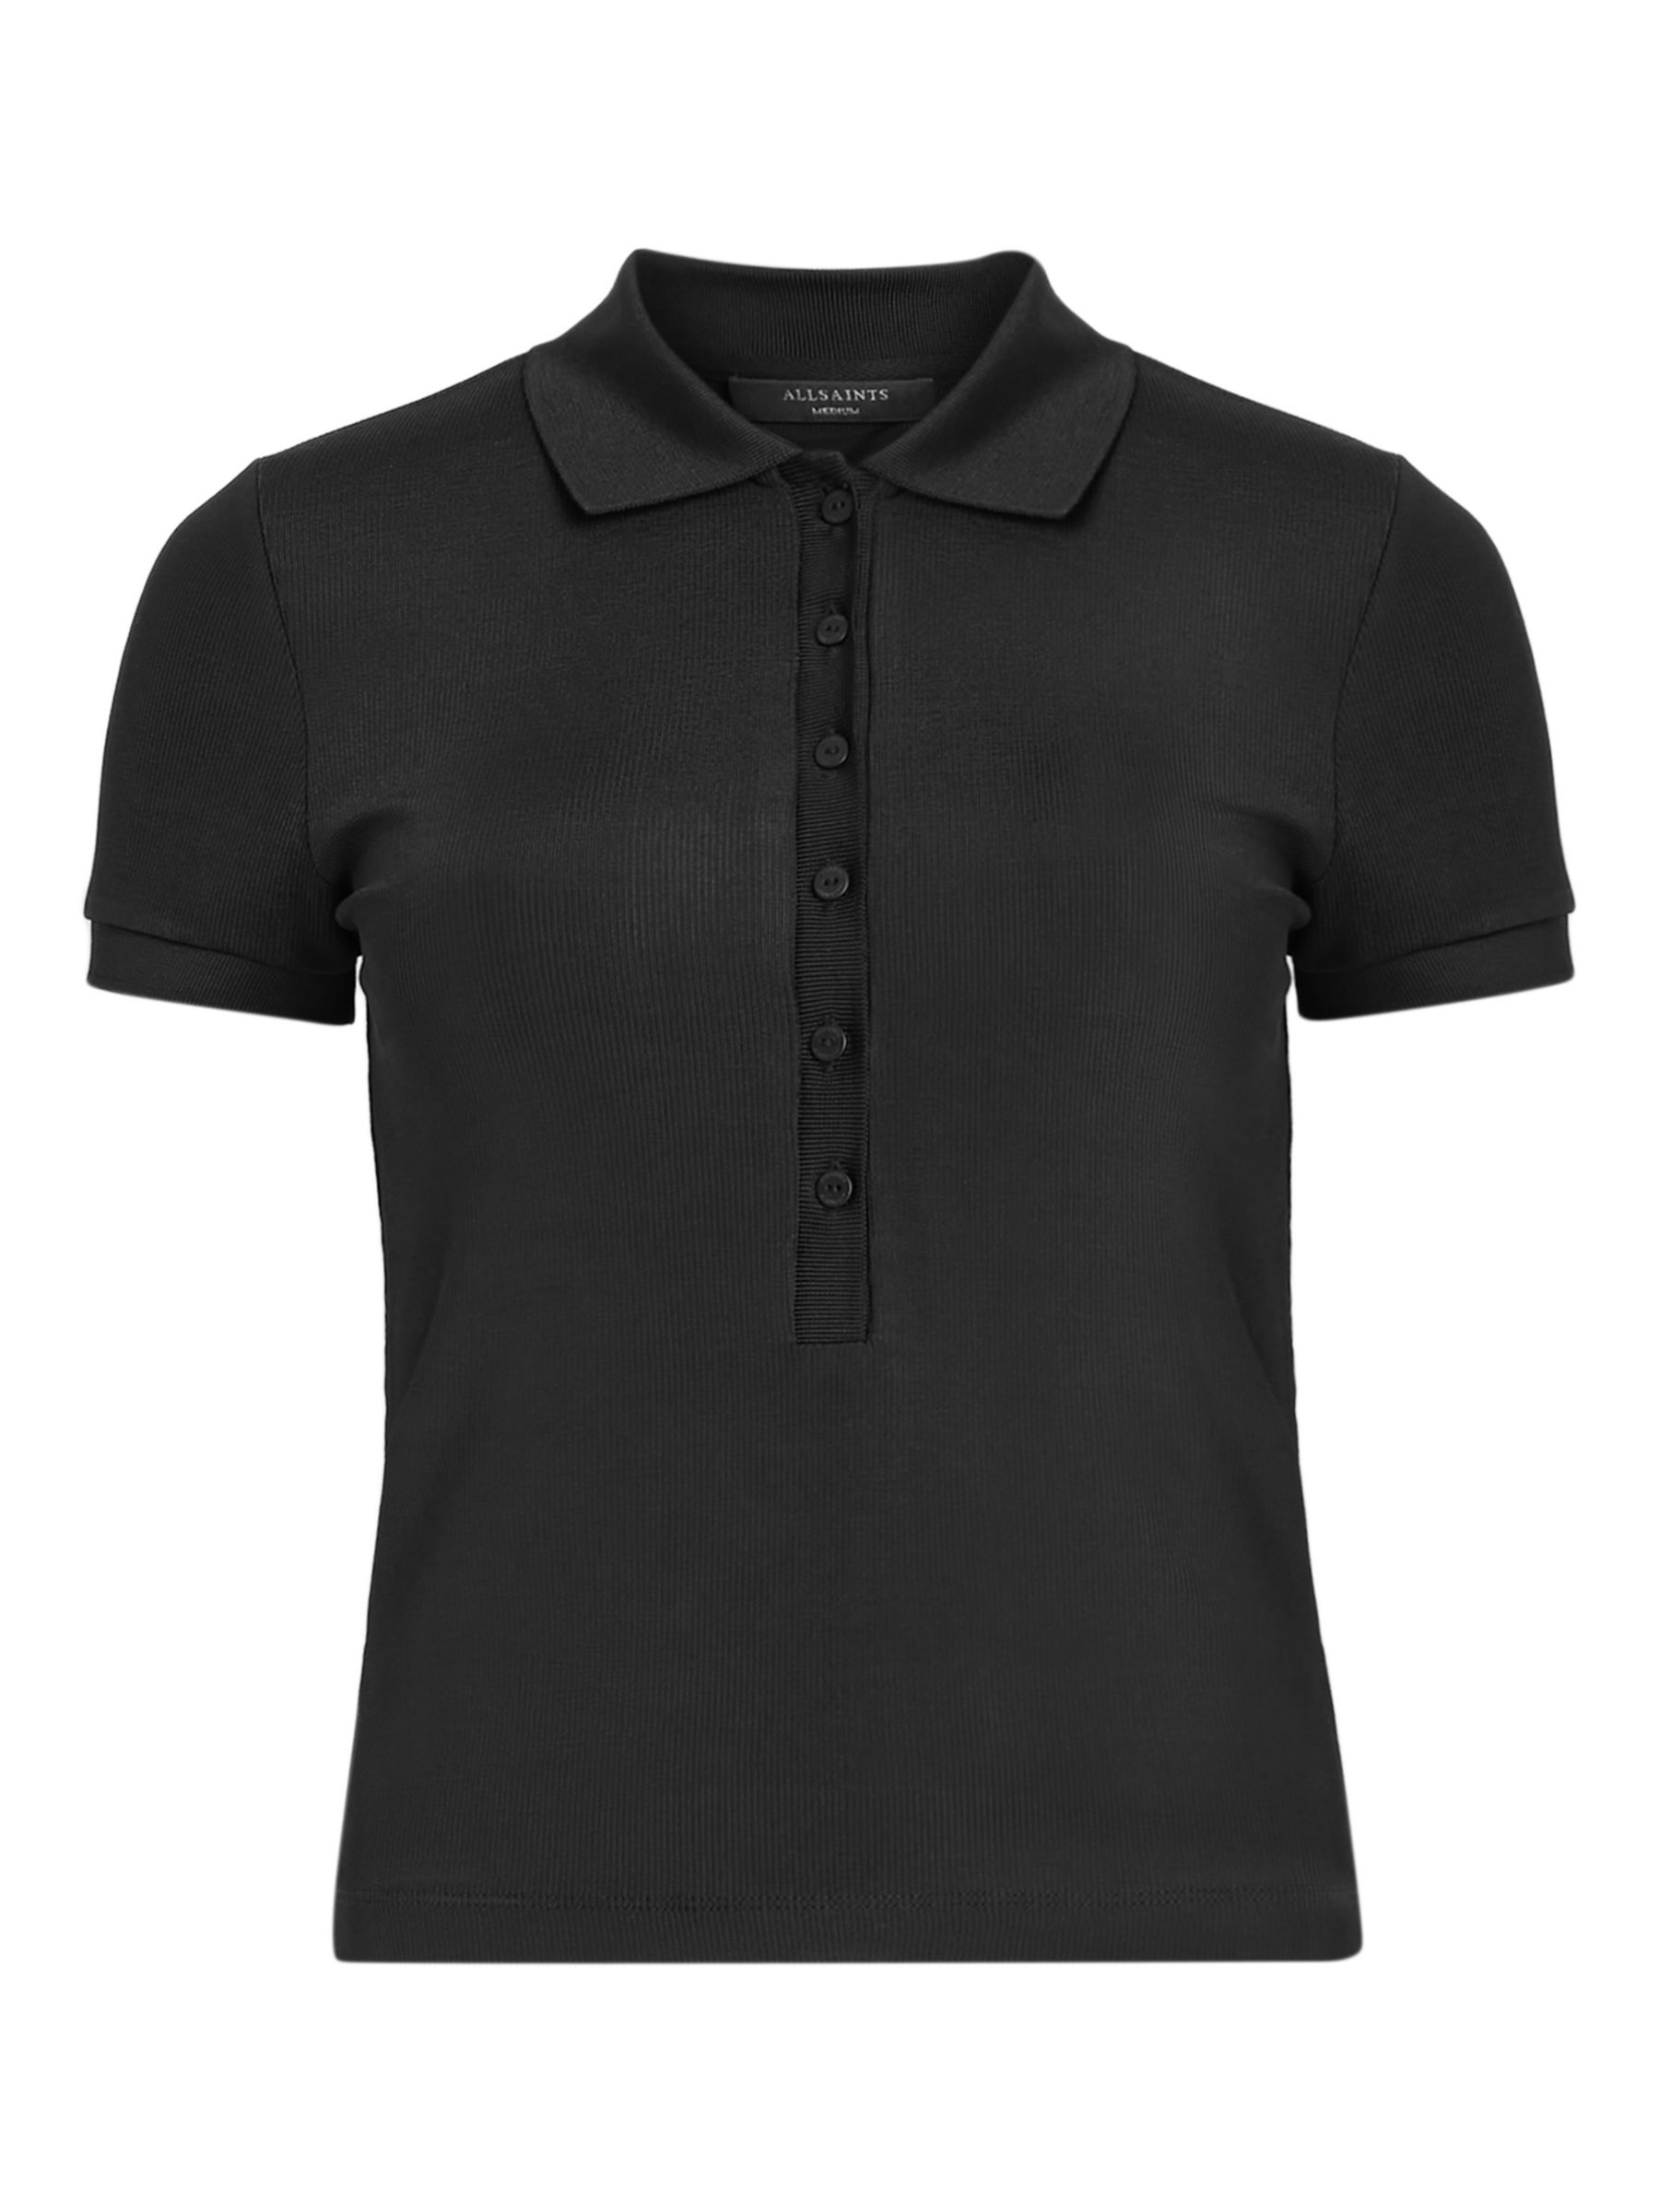 AllSaints Hallie Short Sleeve Polo Top, Black at John Lewis & Partners